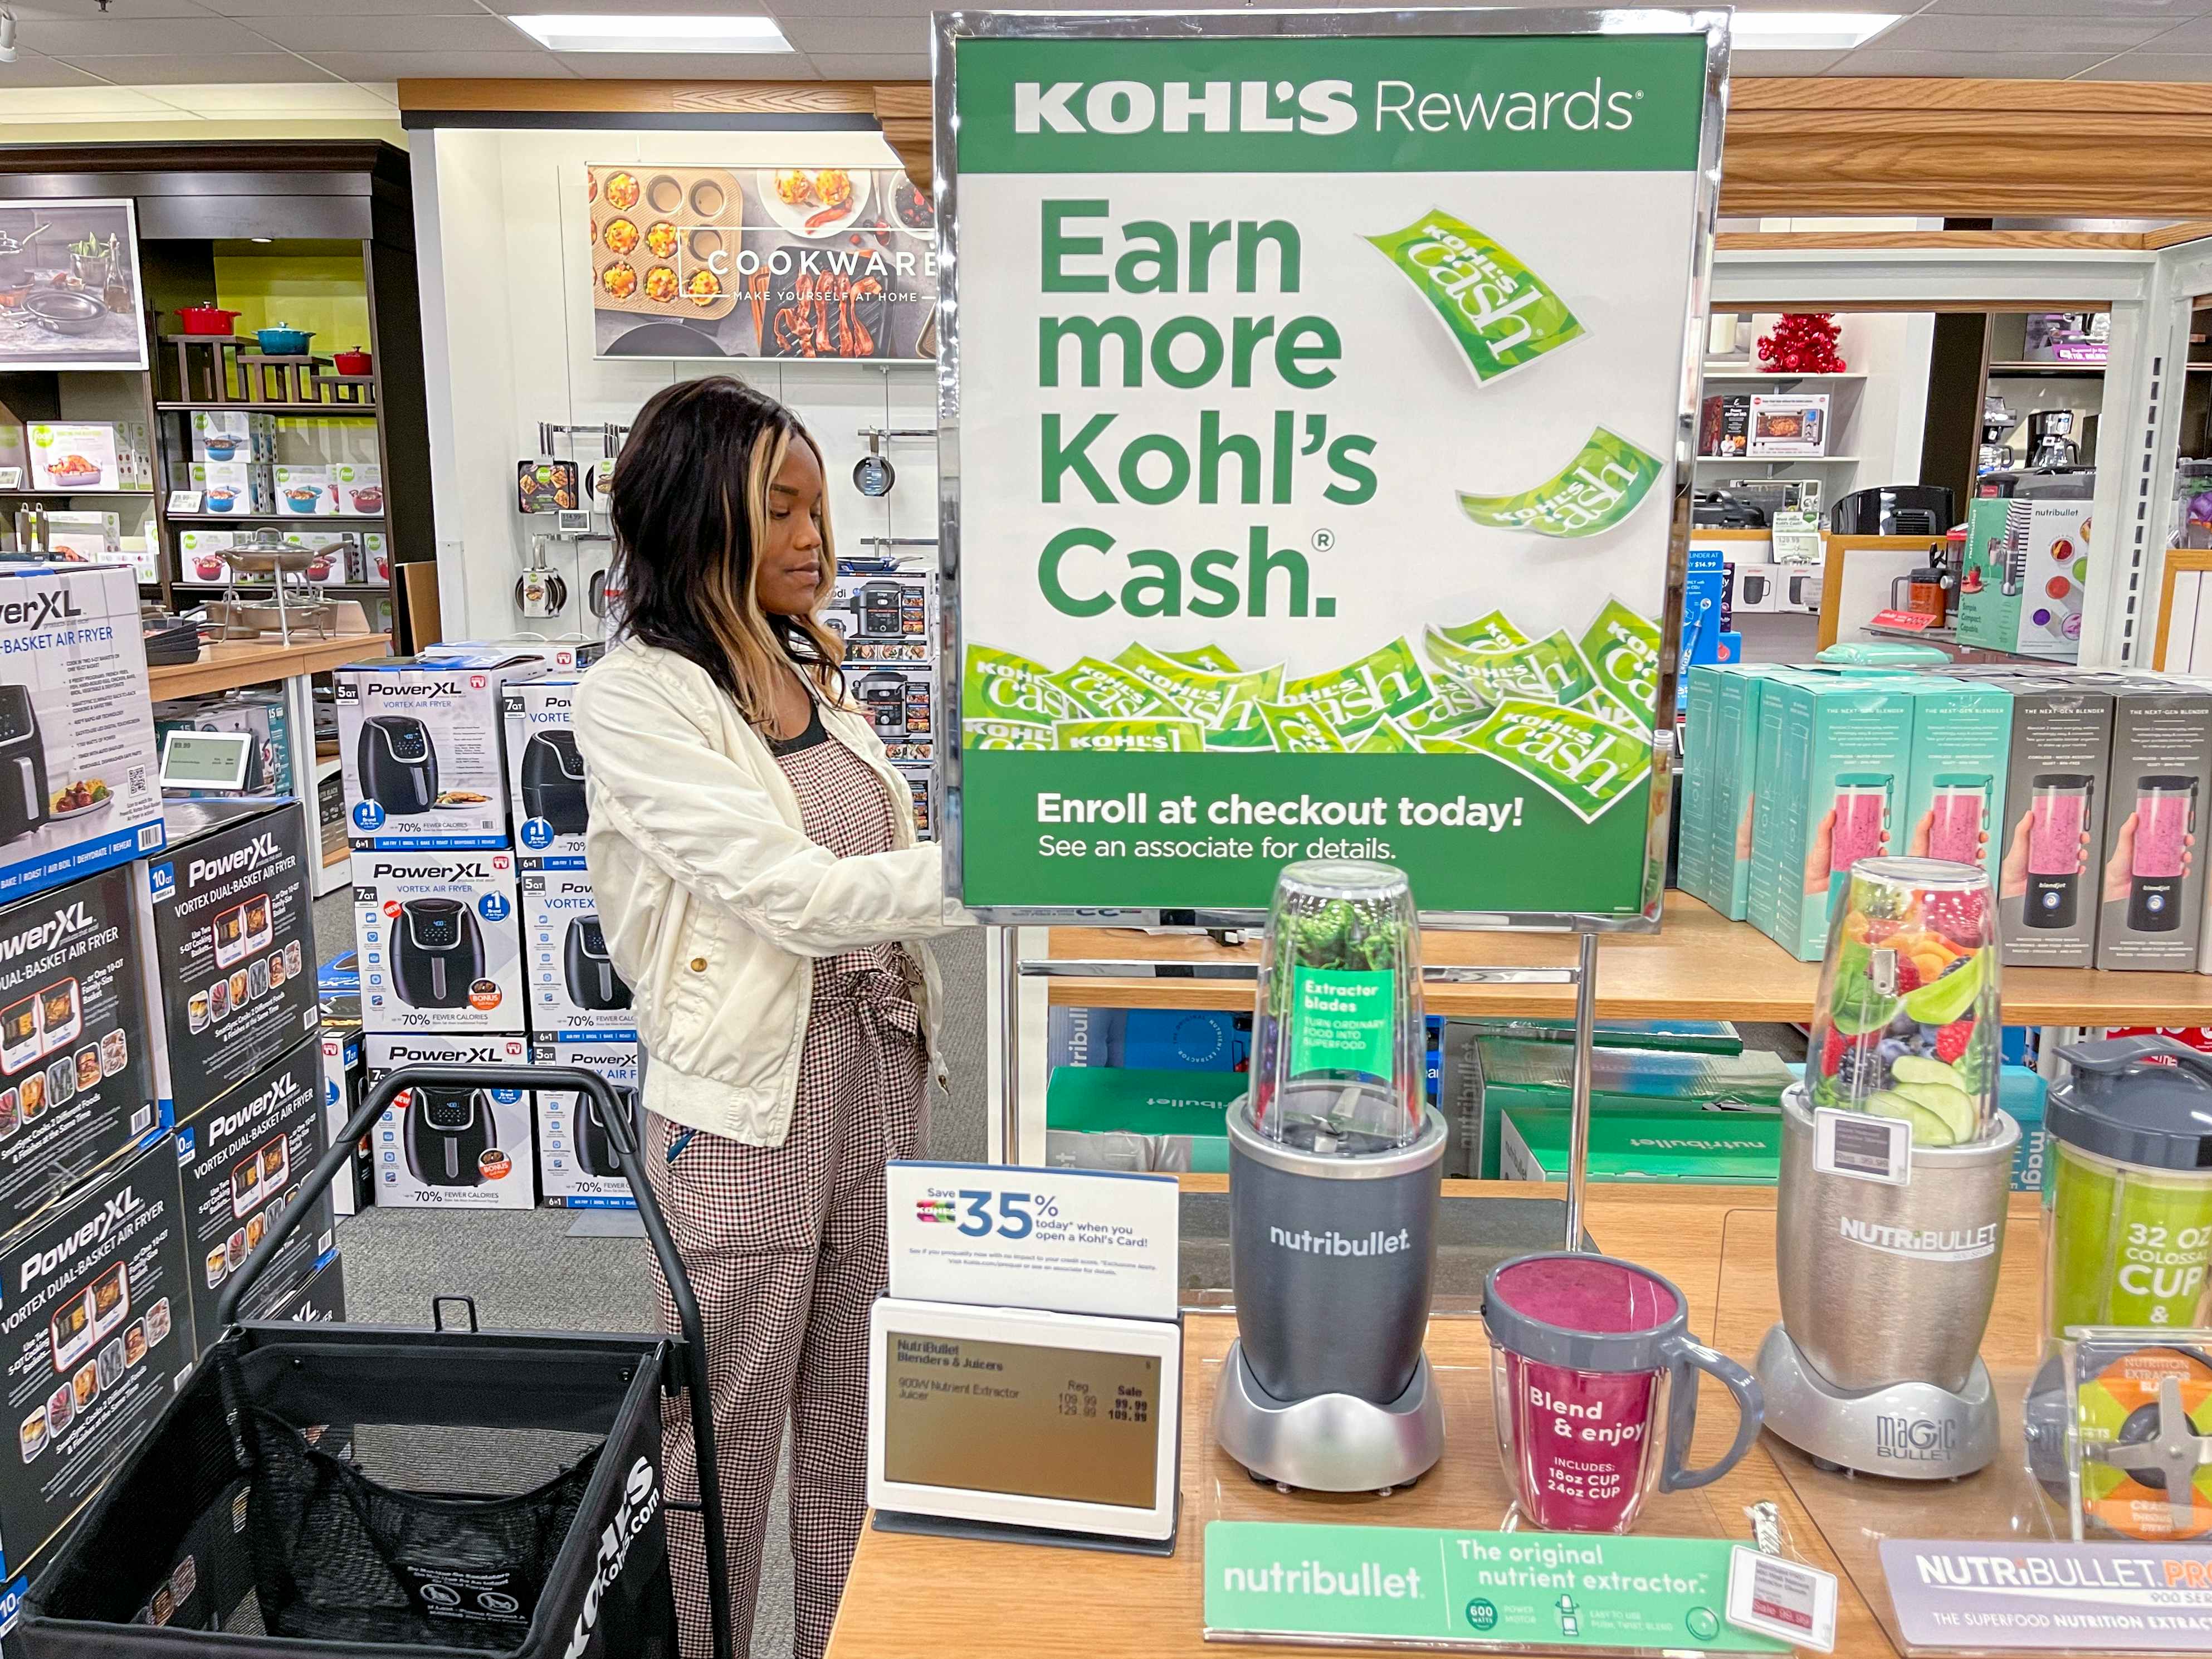 Kohl's cash sign next to magic bullet kitchen appliances at Kohl's